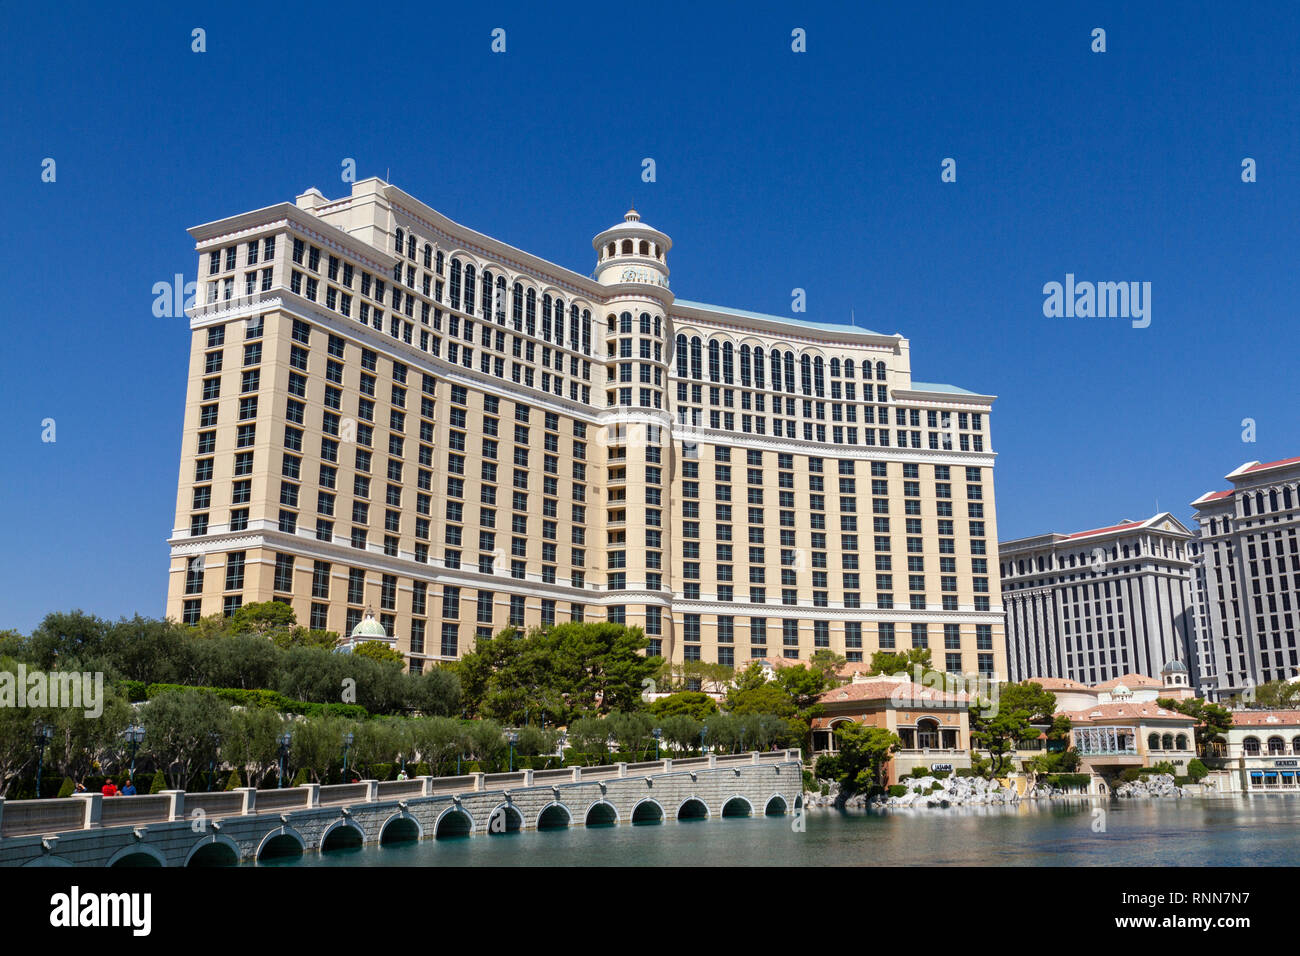 The Bellagio Hotel and Casino, Las Vegas (City of Las Vegas), Nevada, United States. Stock Photo